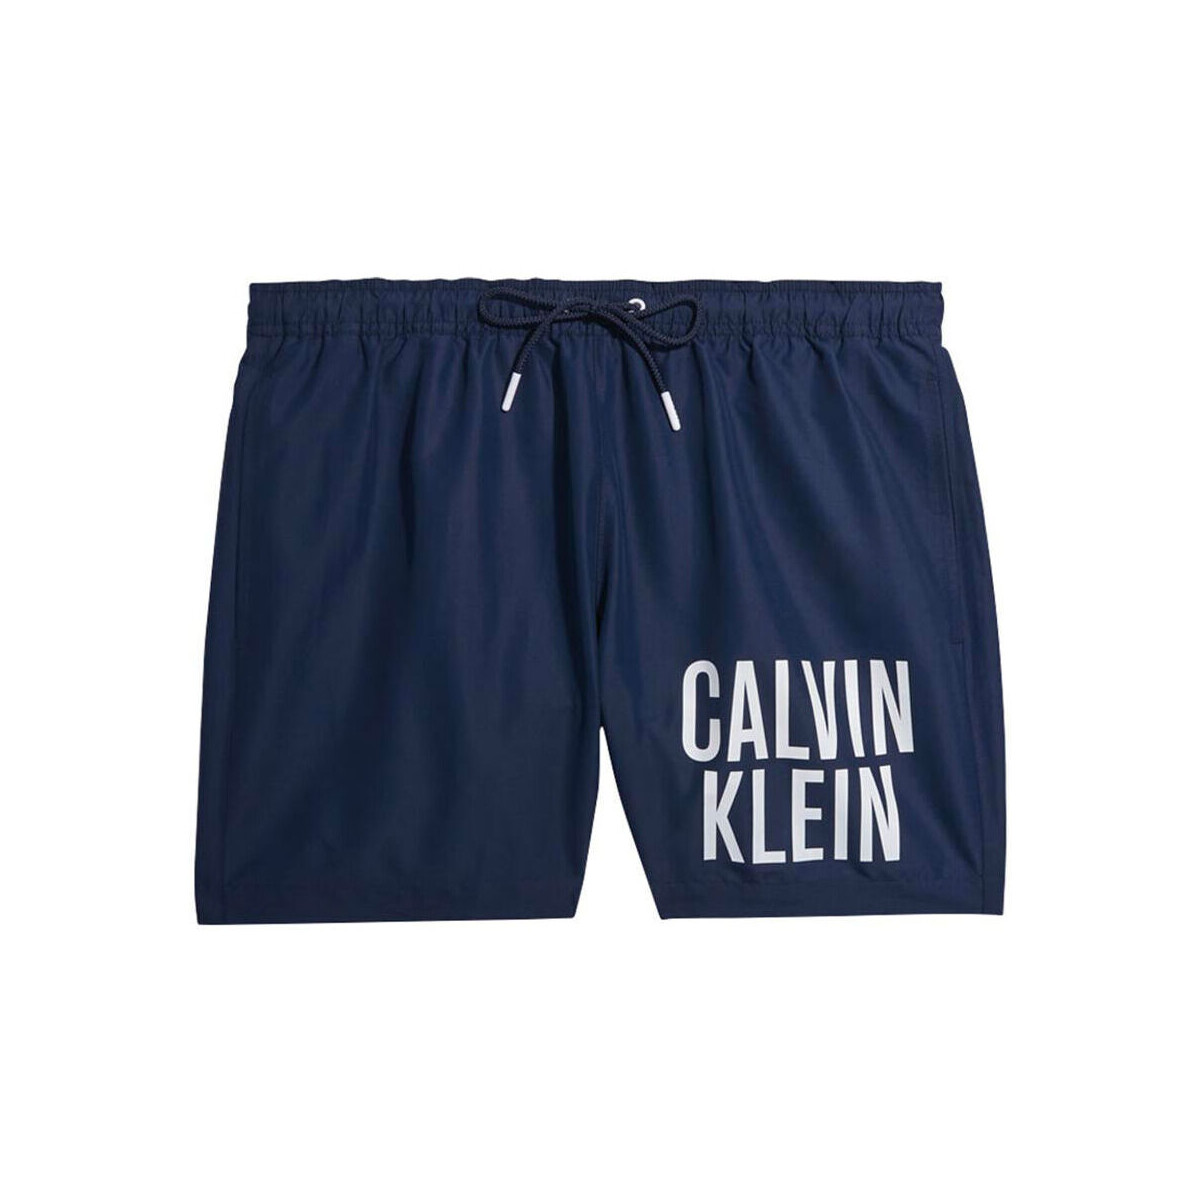 Textil Homem Shorts / Bermudas Calvin Klein Jeans km0km00794-dca blue Azul